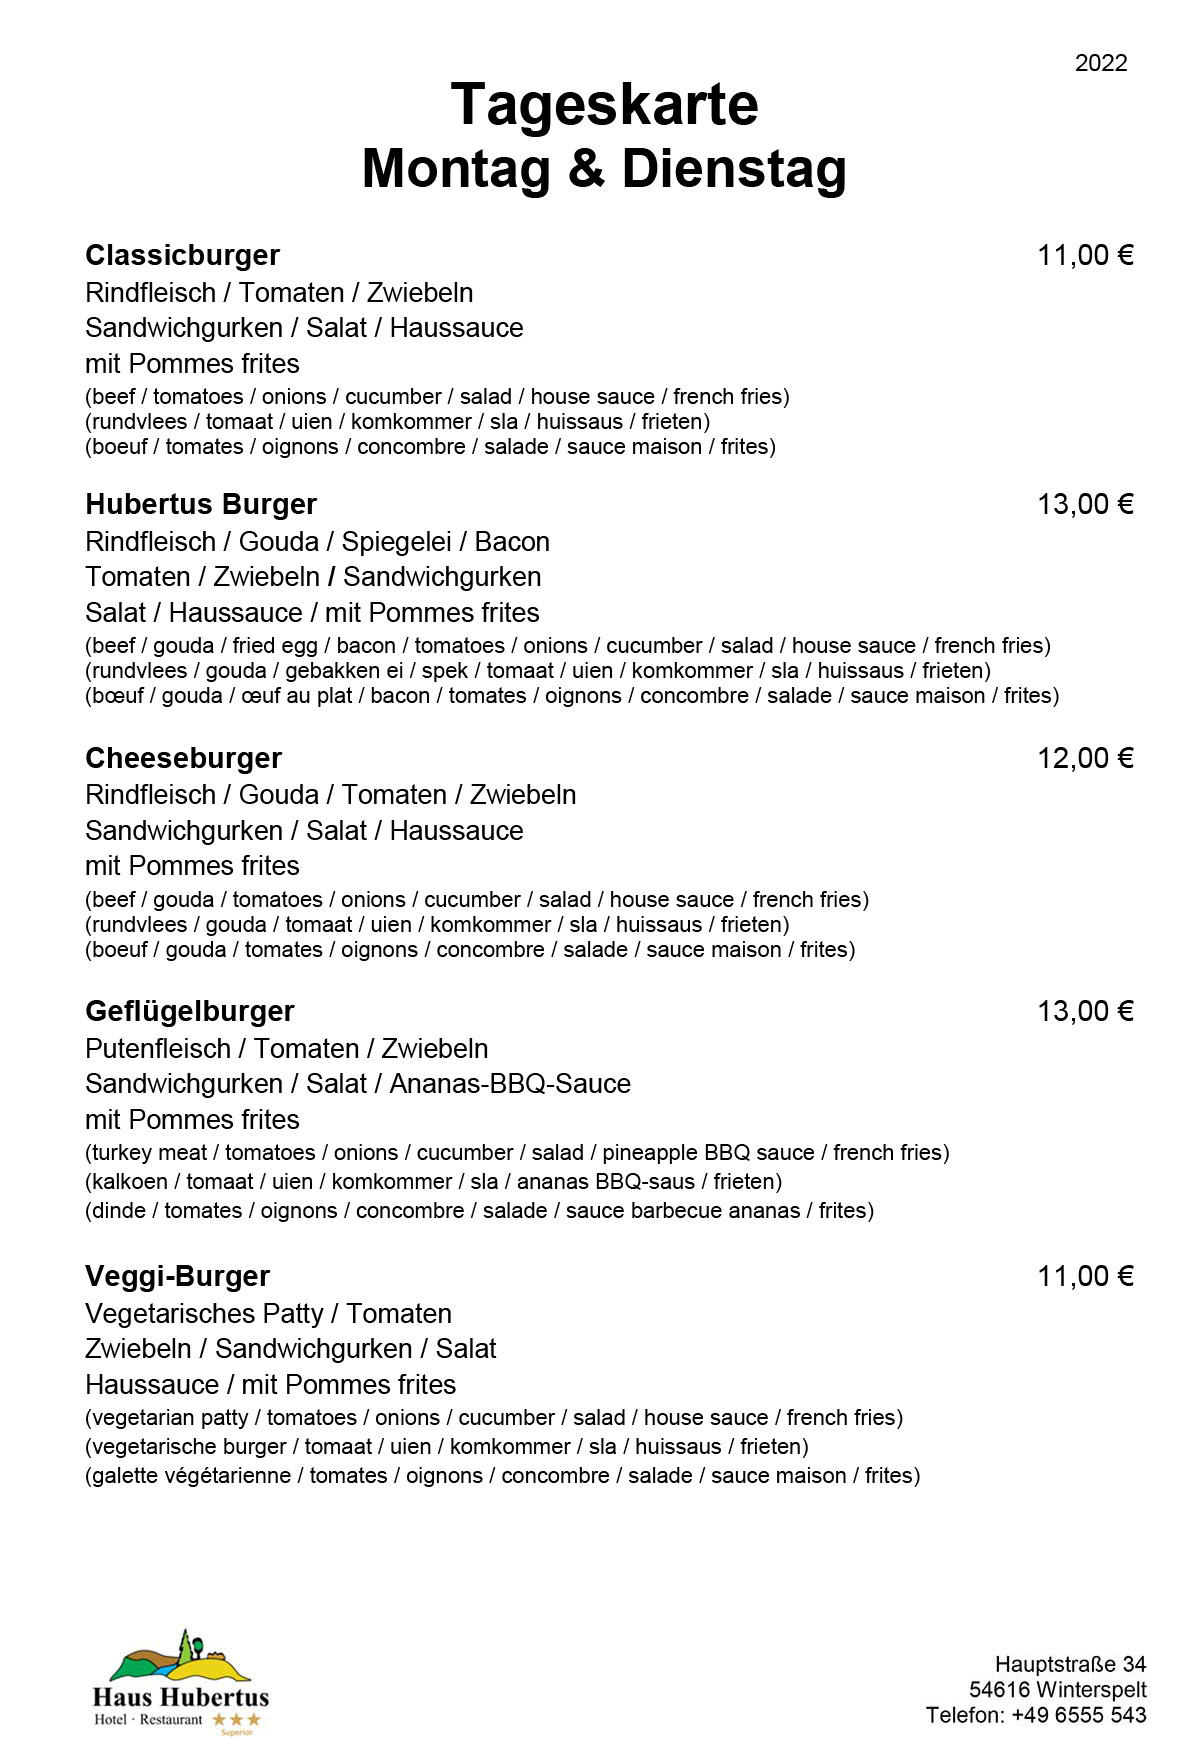 Hotel - Restaurant Haus Hubertus - Menu 2022 - Daily menu / Monday and Tuesday